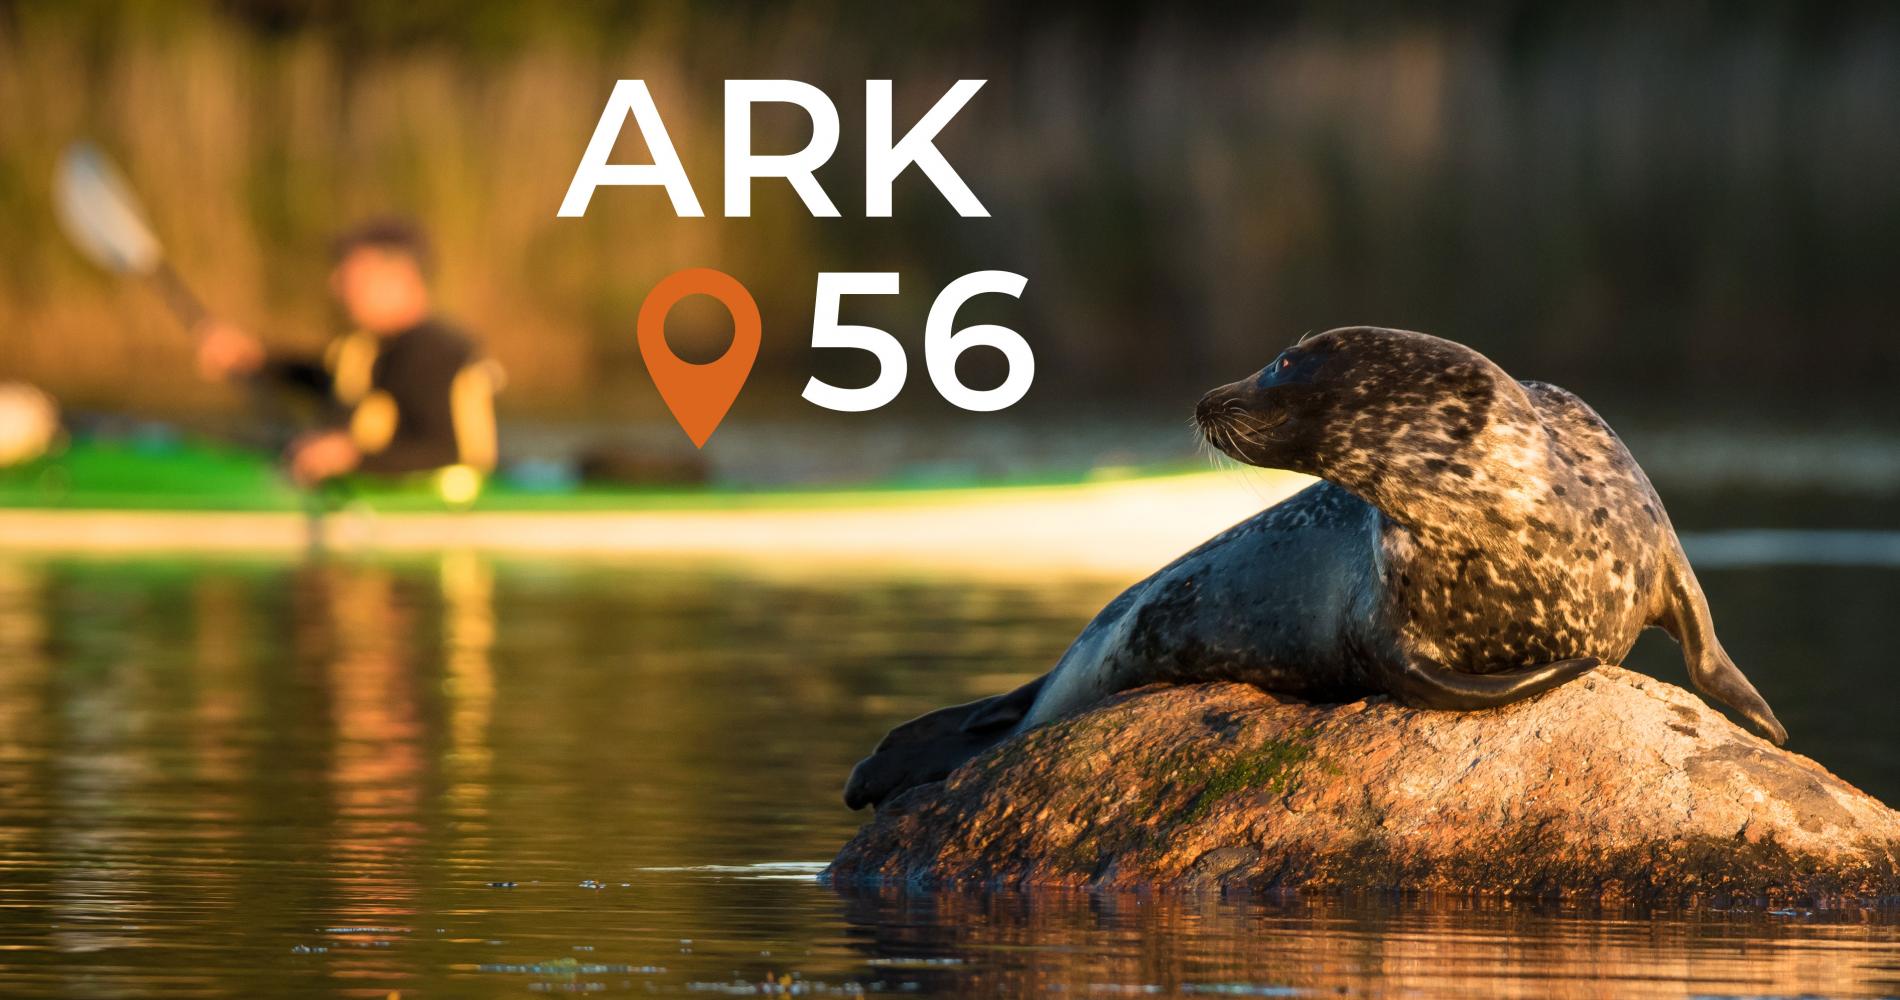 ark56 seal logo